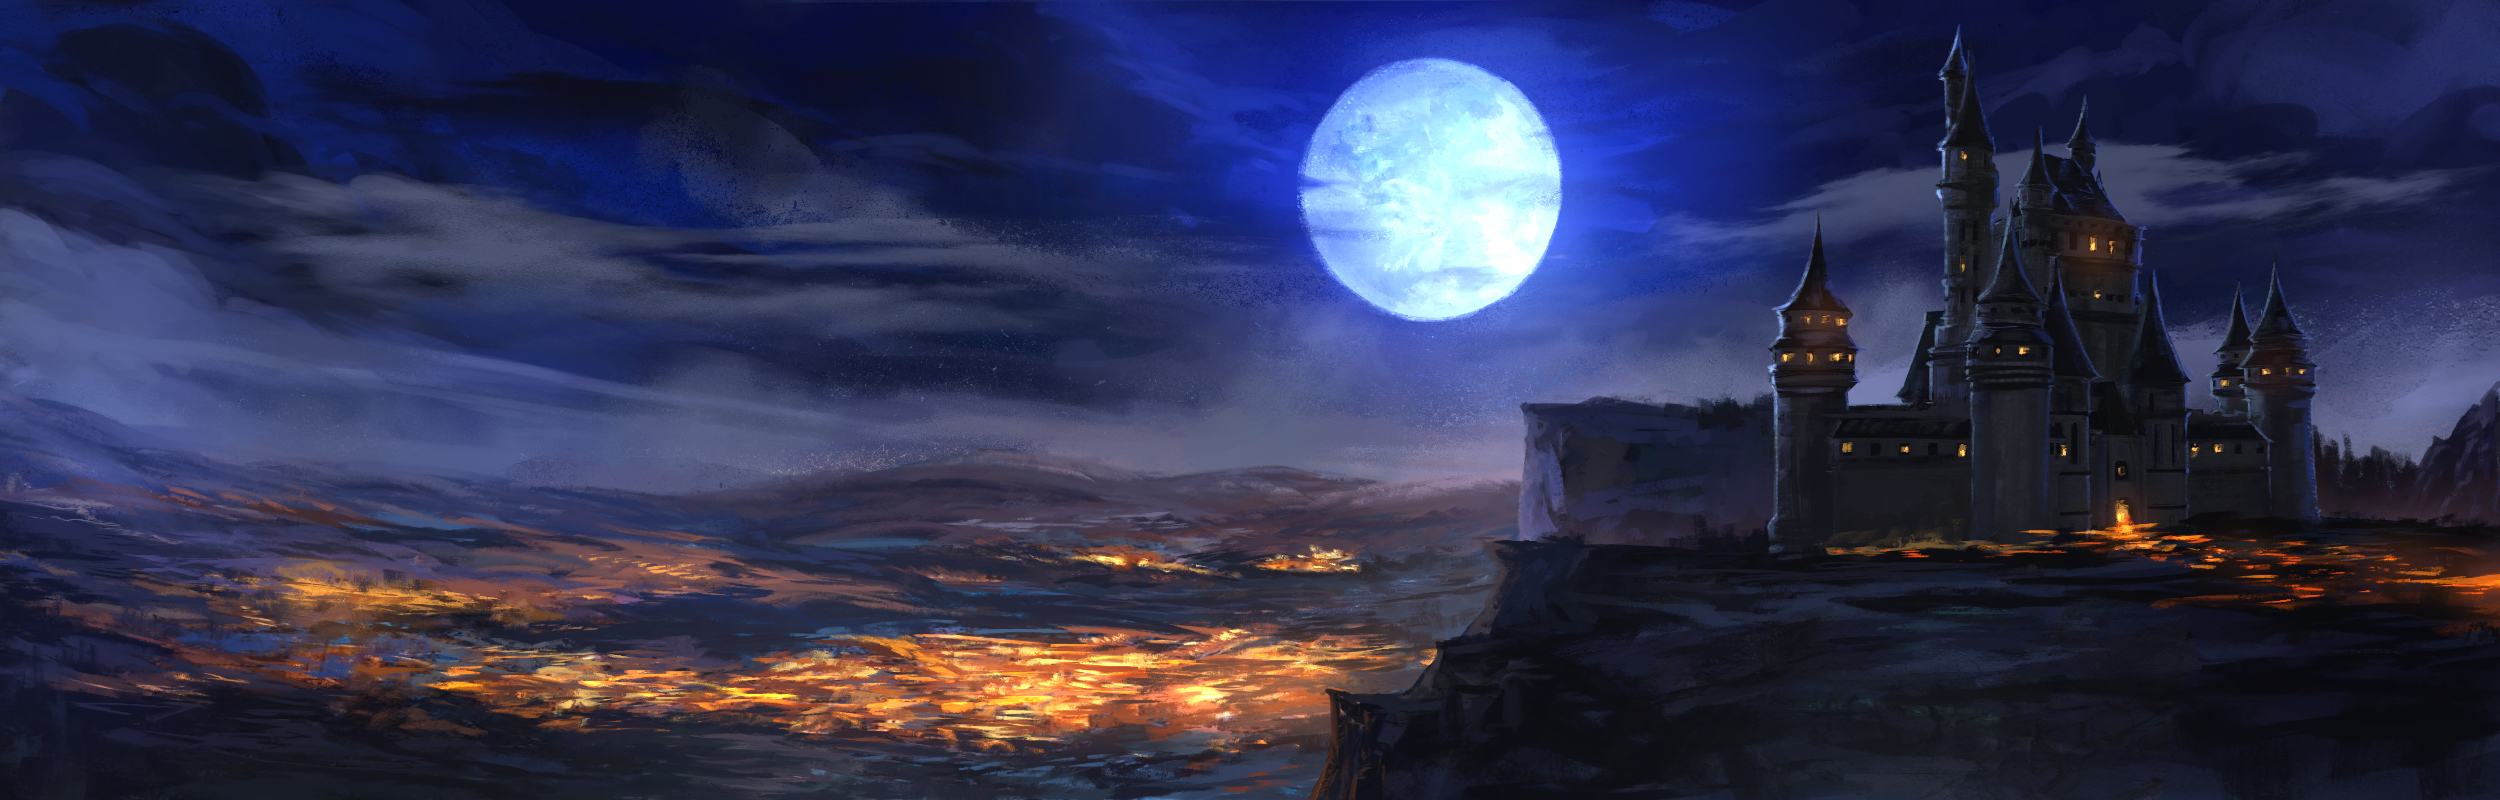 Assassin Lurking by Castle in Moonlight